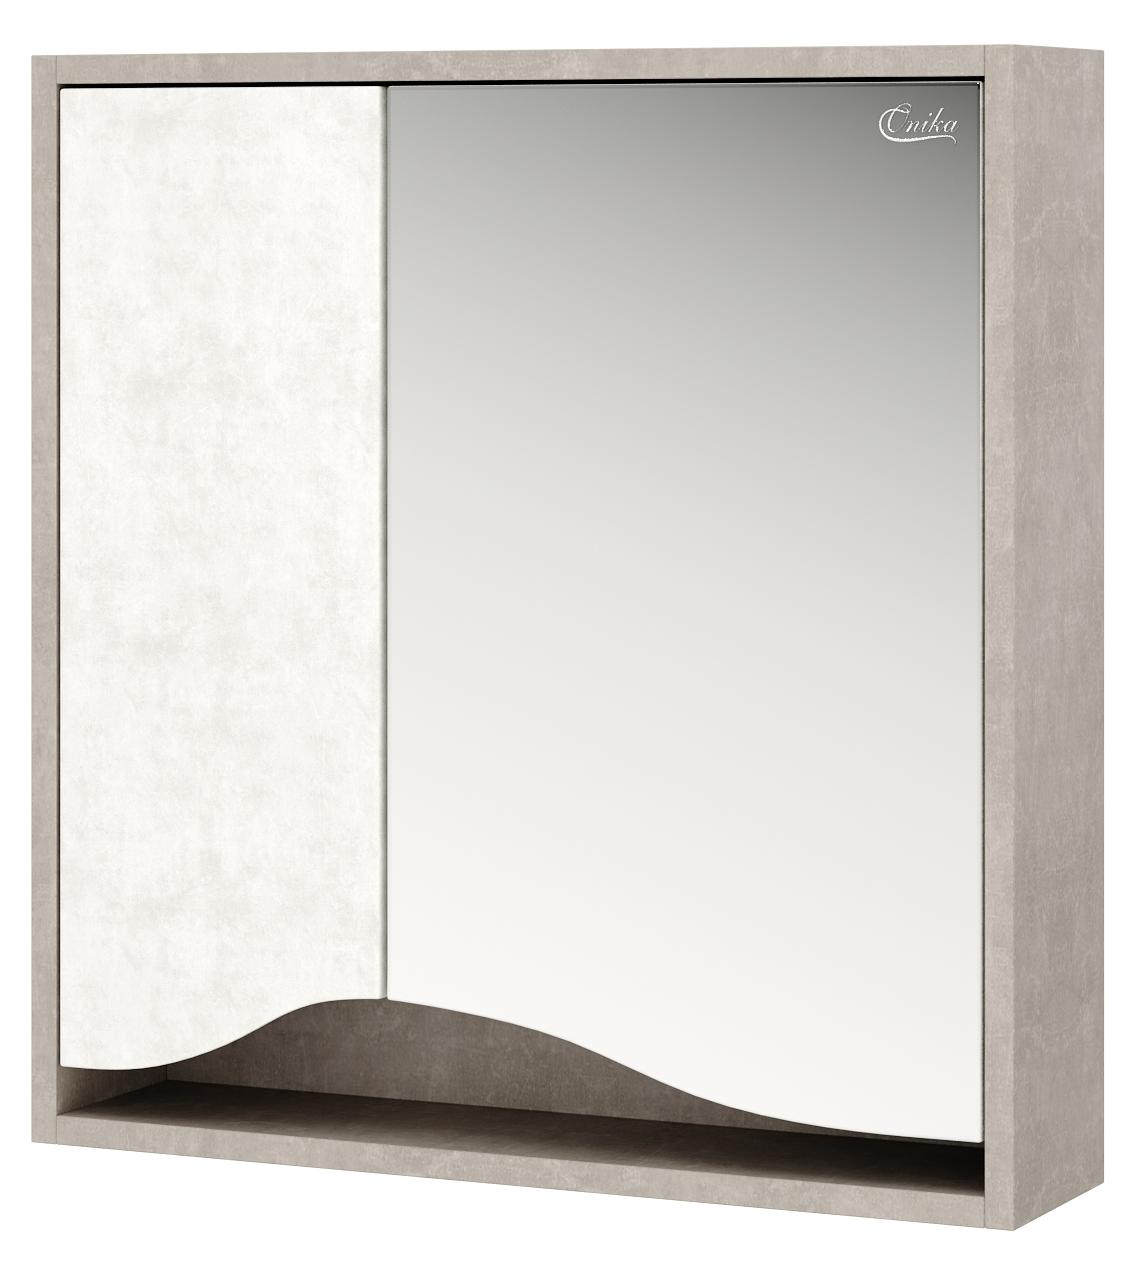 Зеркальный шкаф Onika Брендон 60 см бетон крем/светлый камень, 206084